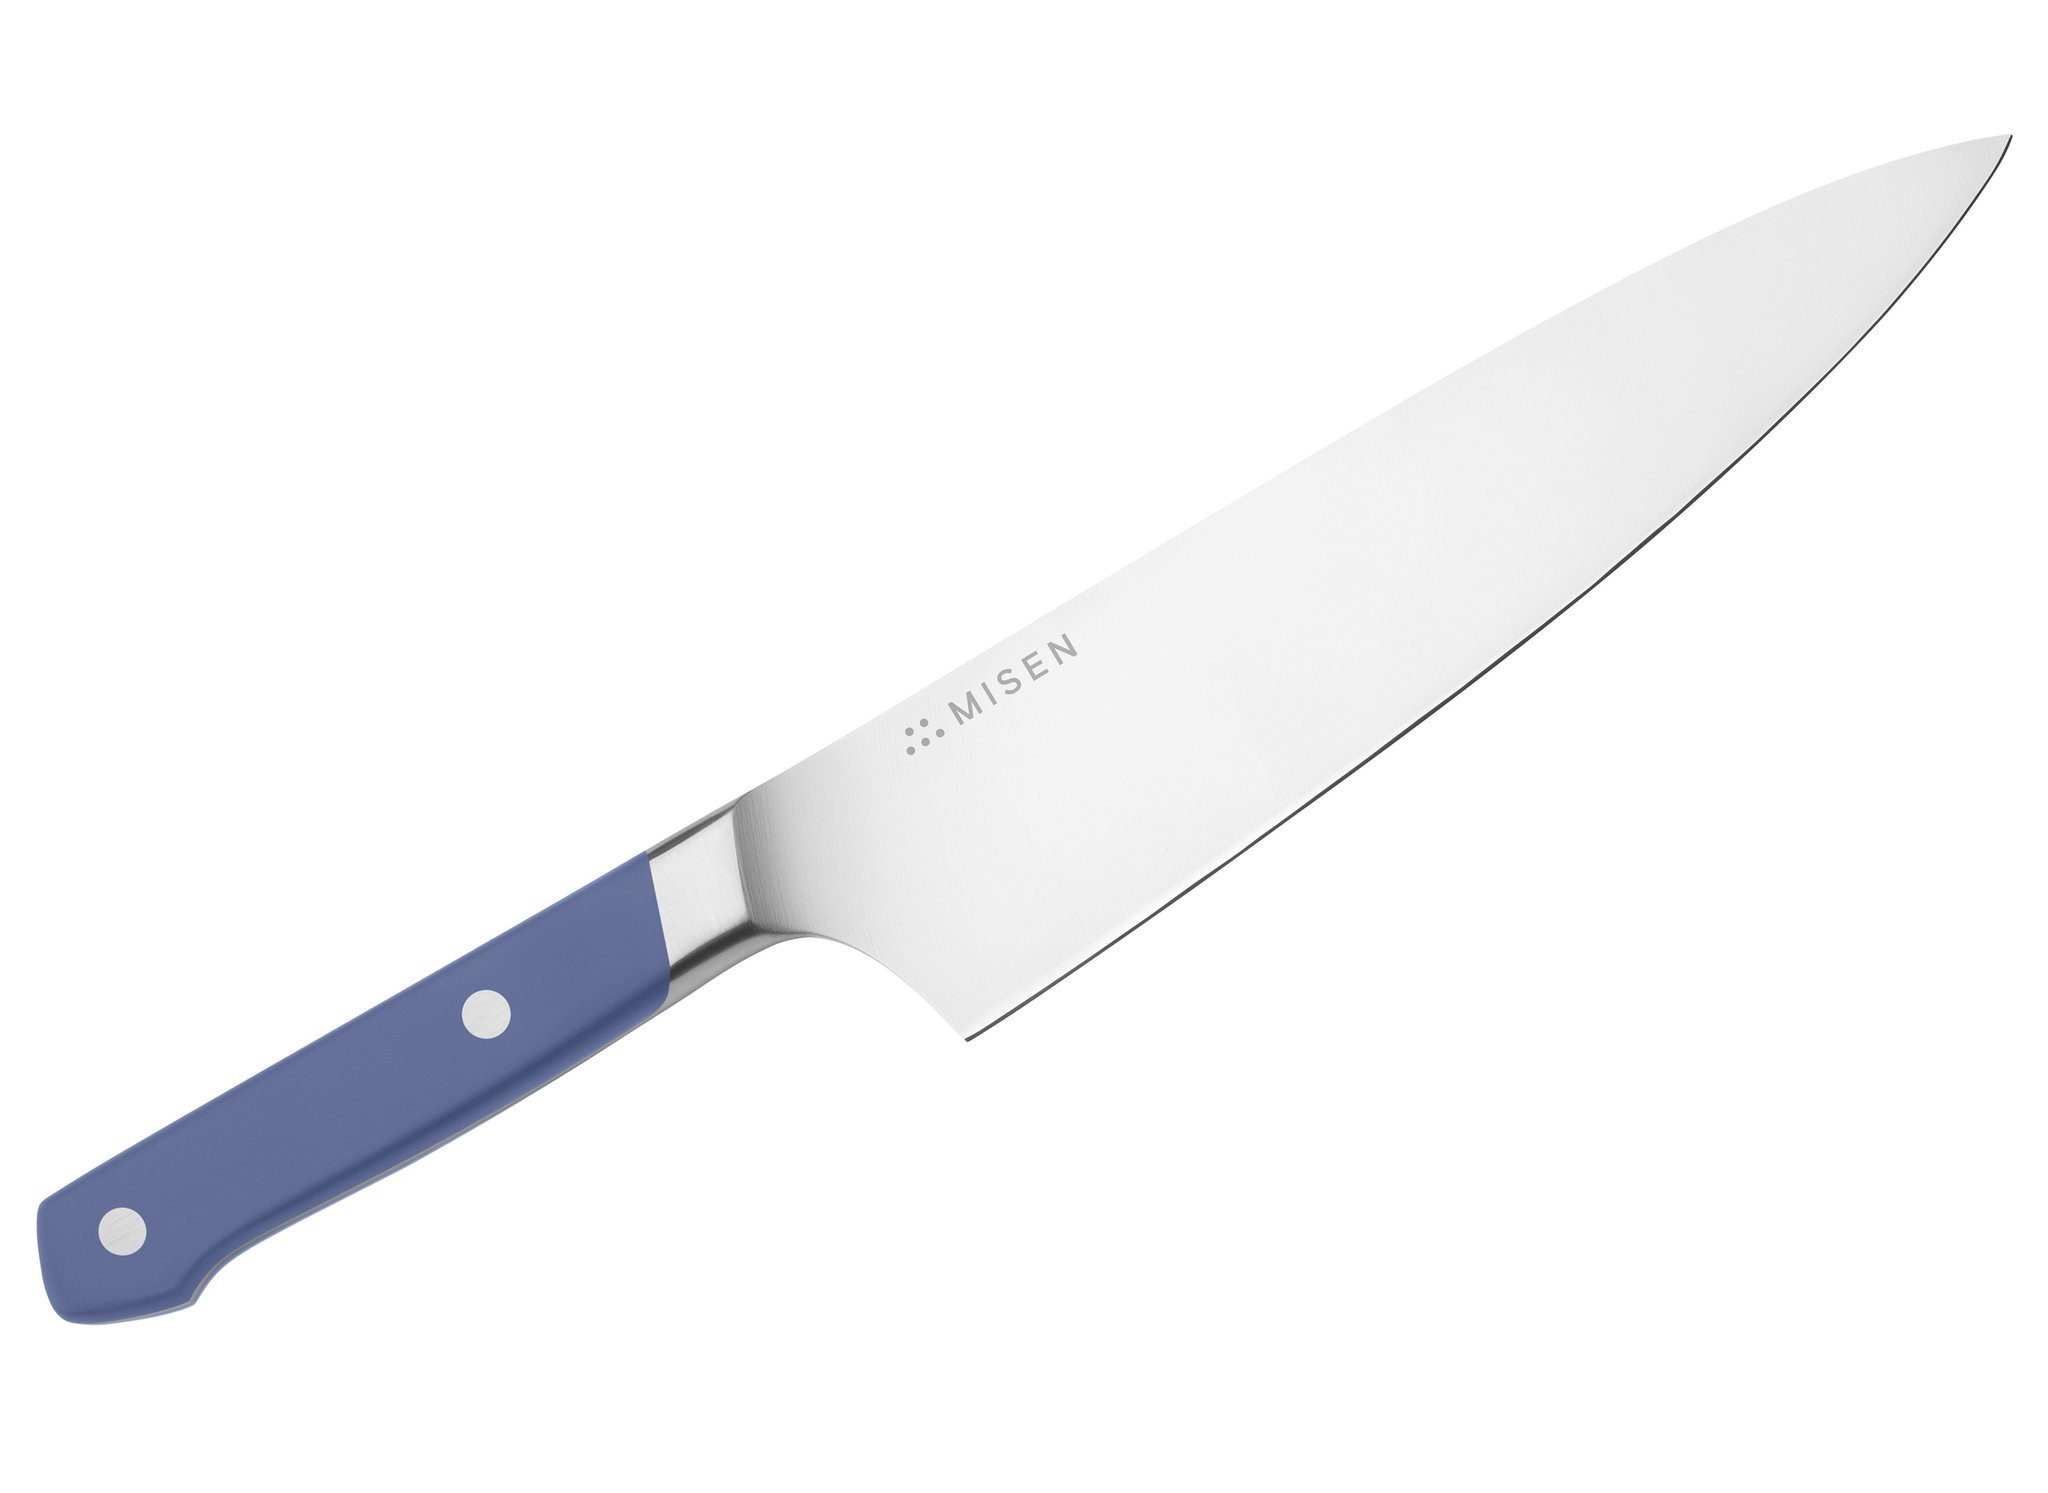 Misen 8-inch Chef’s Knife